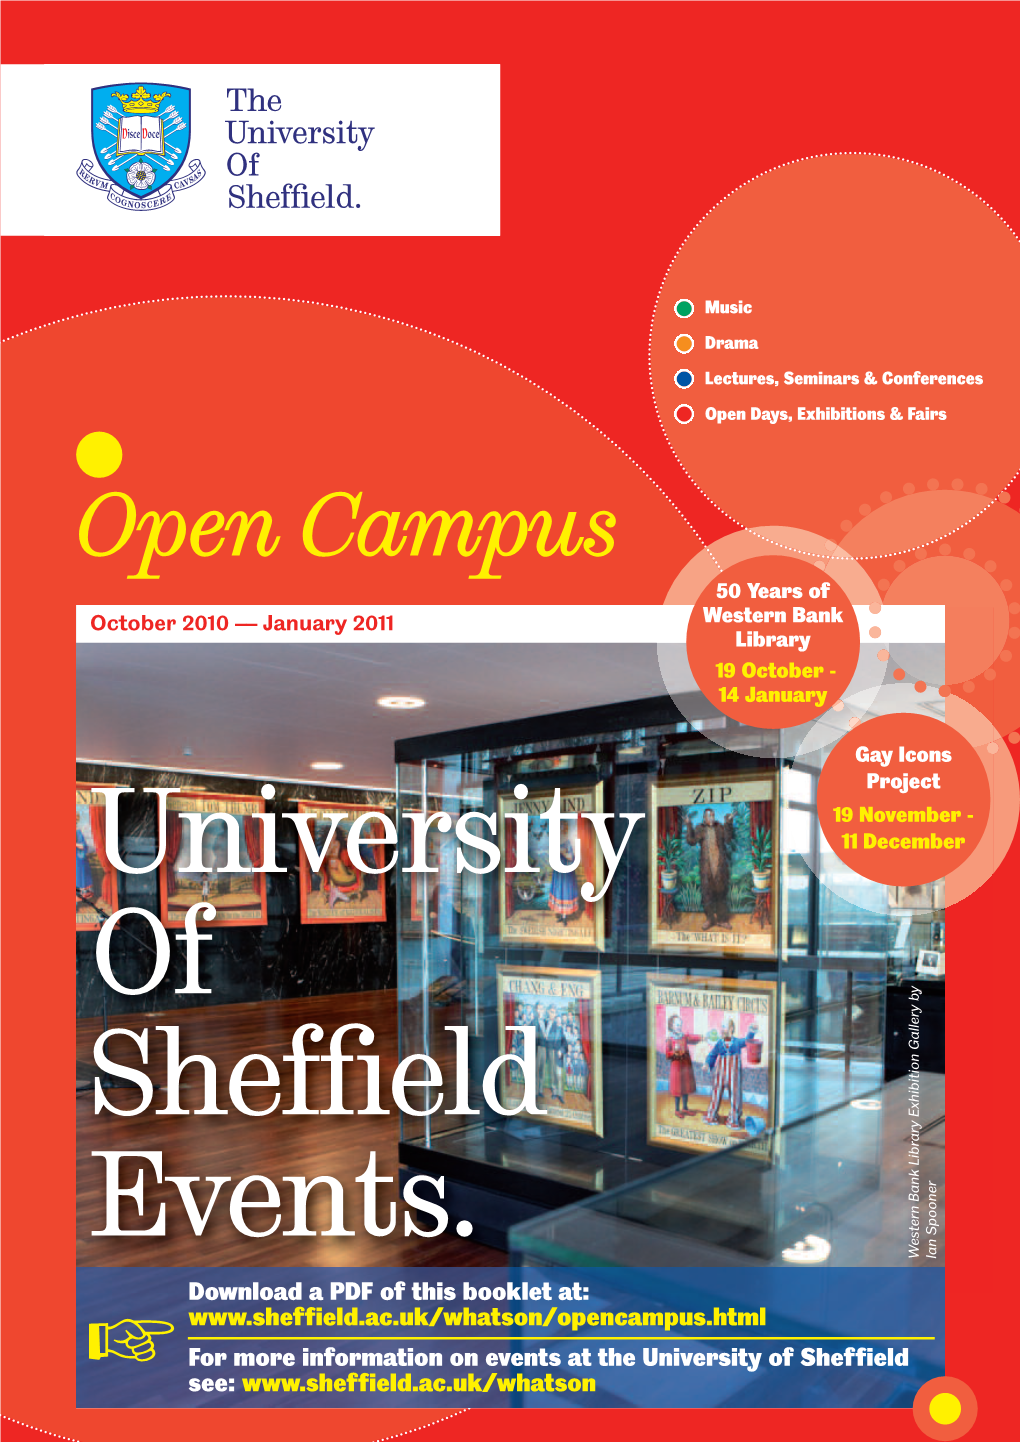 University of Sheffield Events